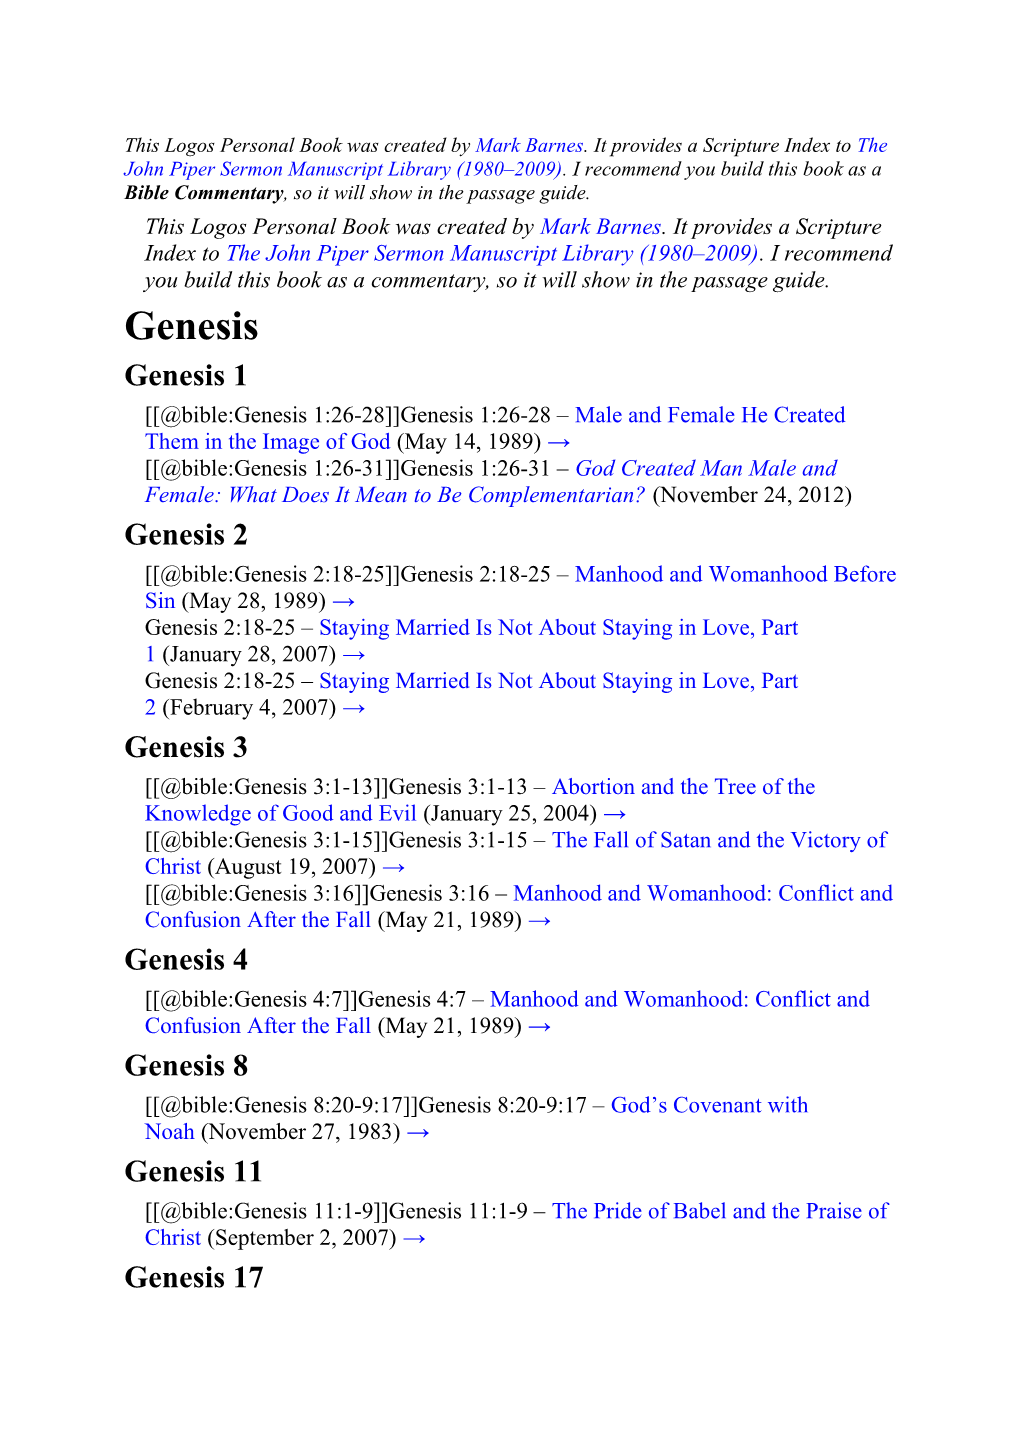 Scripture Index to the John Piper Sermon Manuscript Library